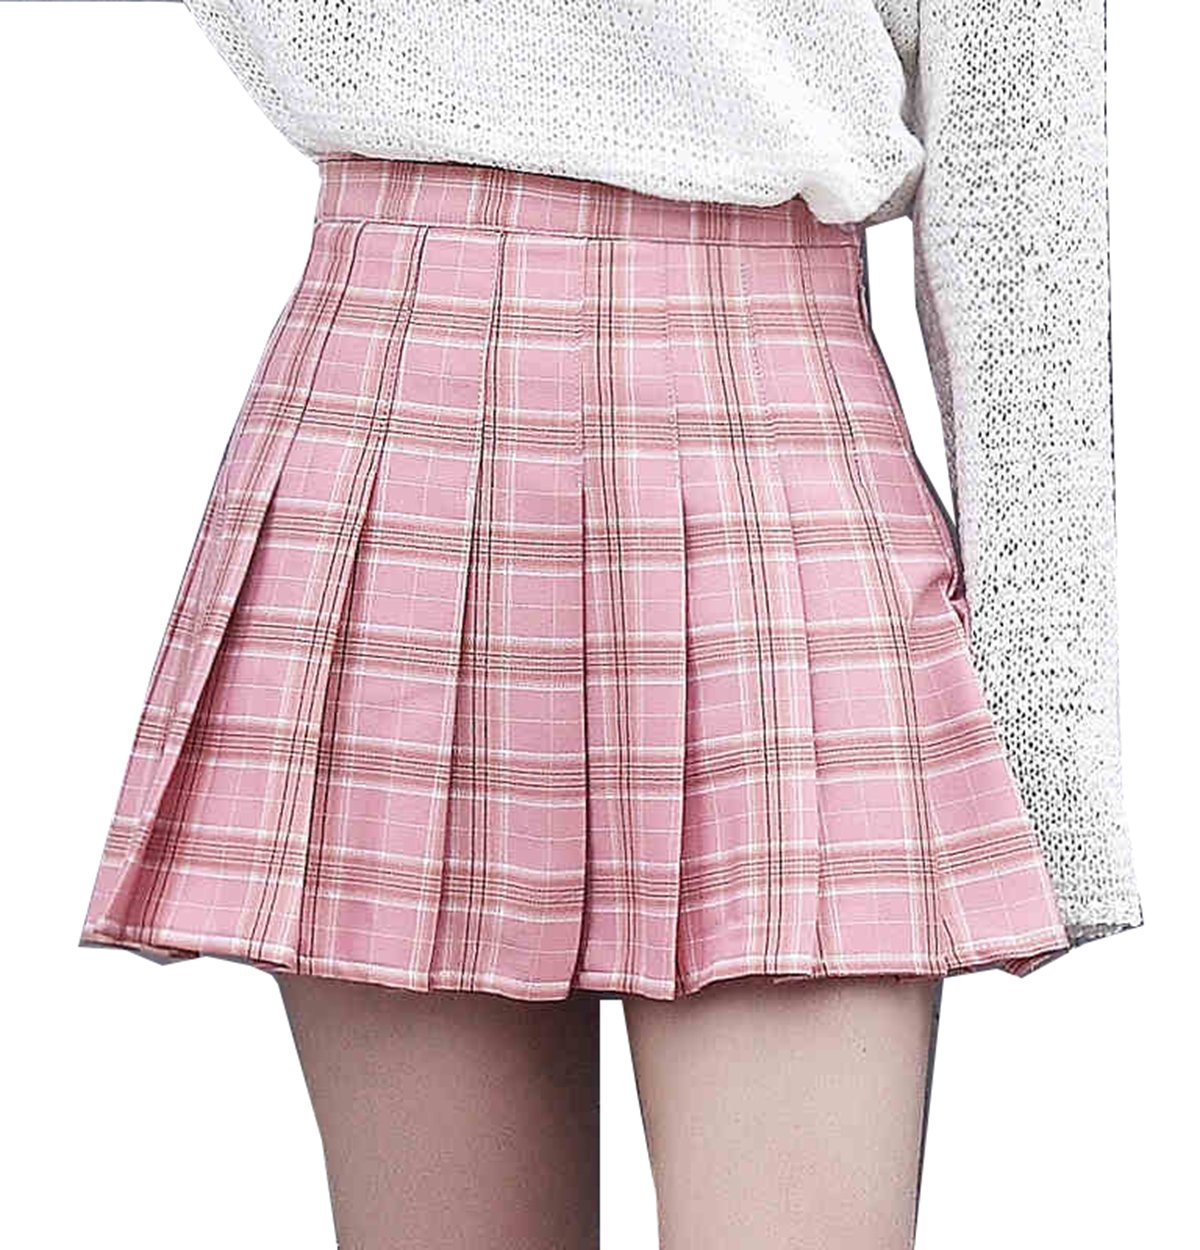 Cheerlife Mädchen Damen süße Prinzessin Büste Rock Plissee Schuluniform Hosenröcke Kariert Faltenröcke Minirock XL Rosa